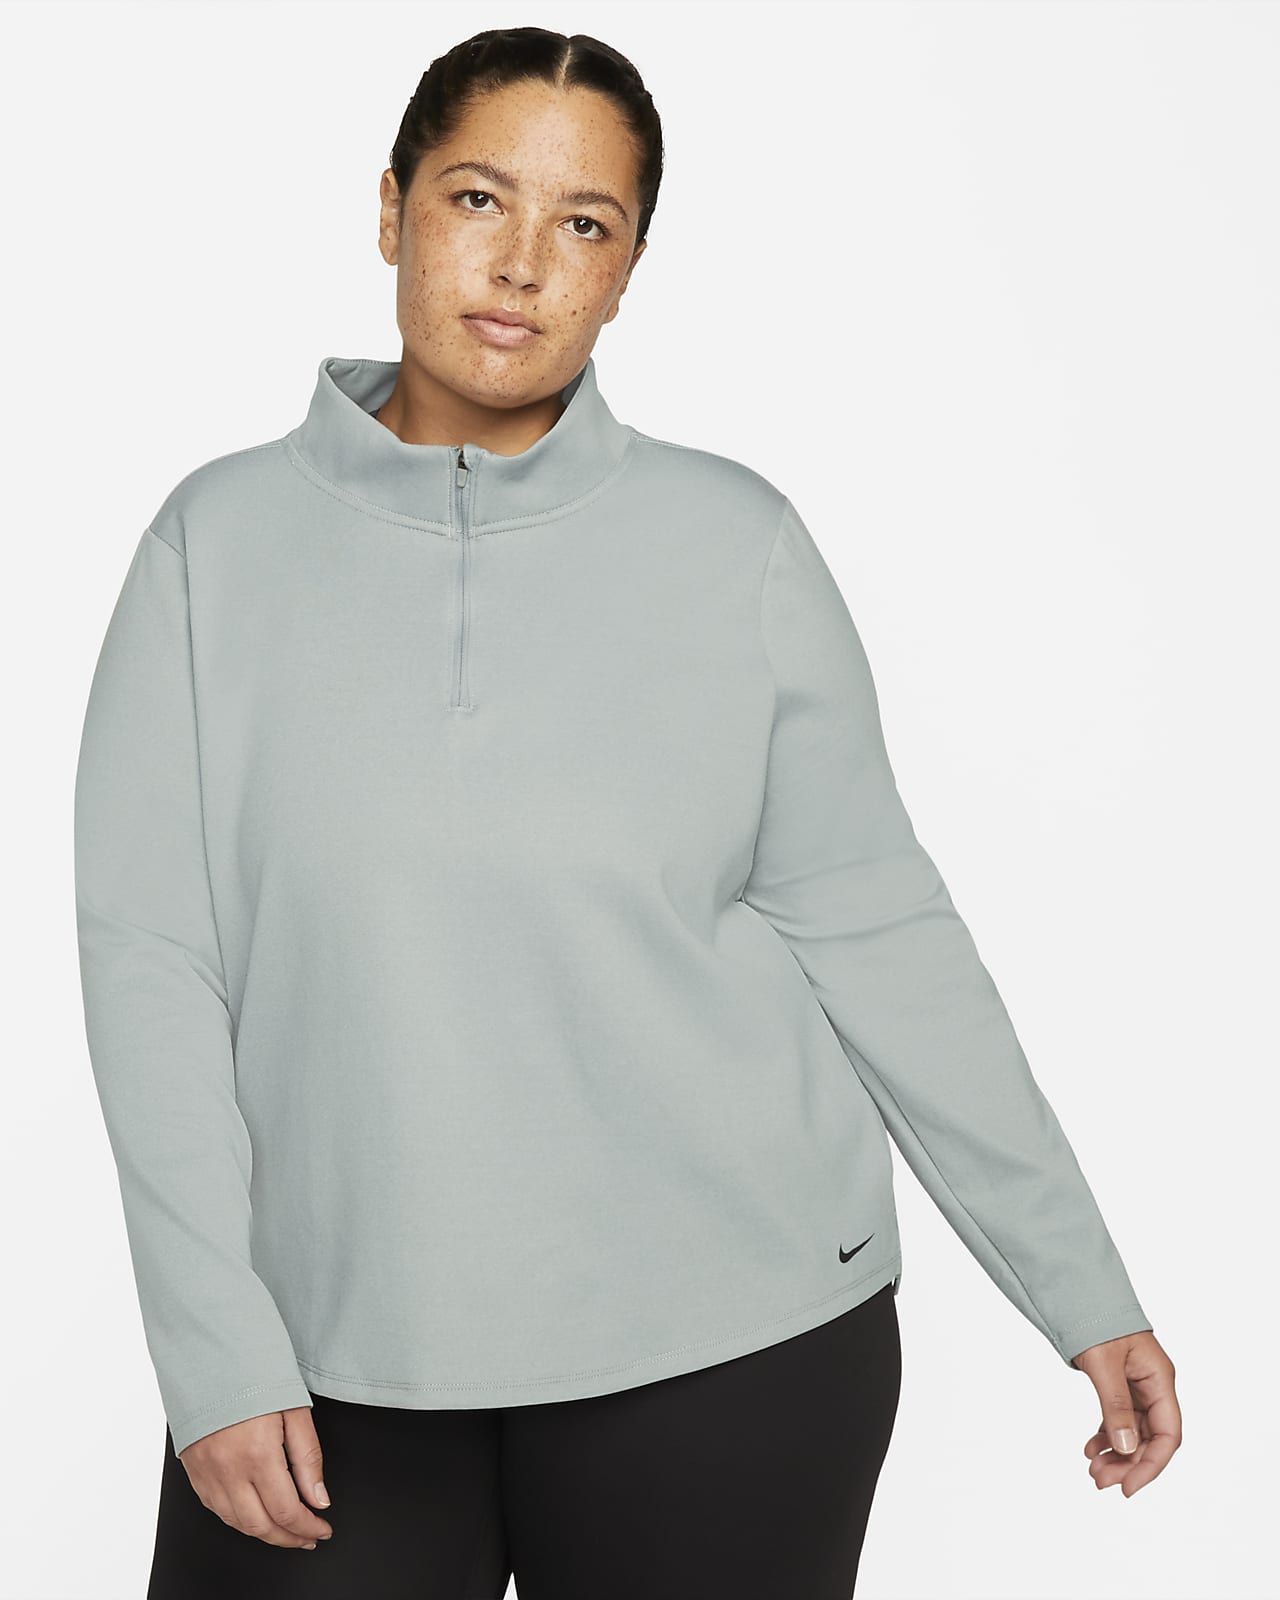 Women's Long-Sleeve 1/2-Zip Top (Plus Size) | Nike (US)